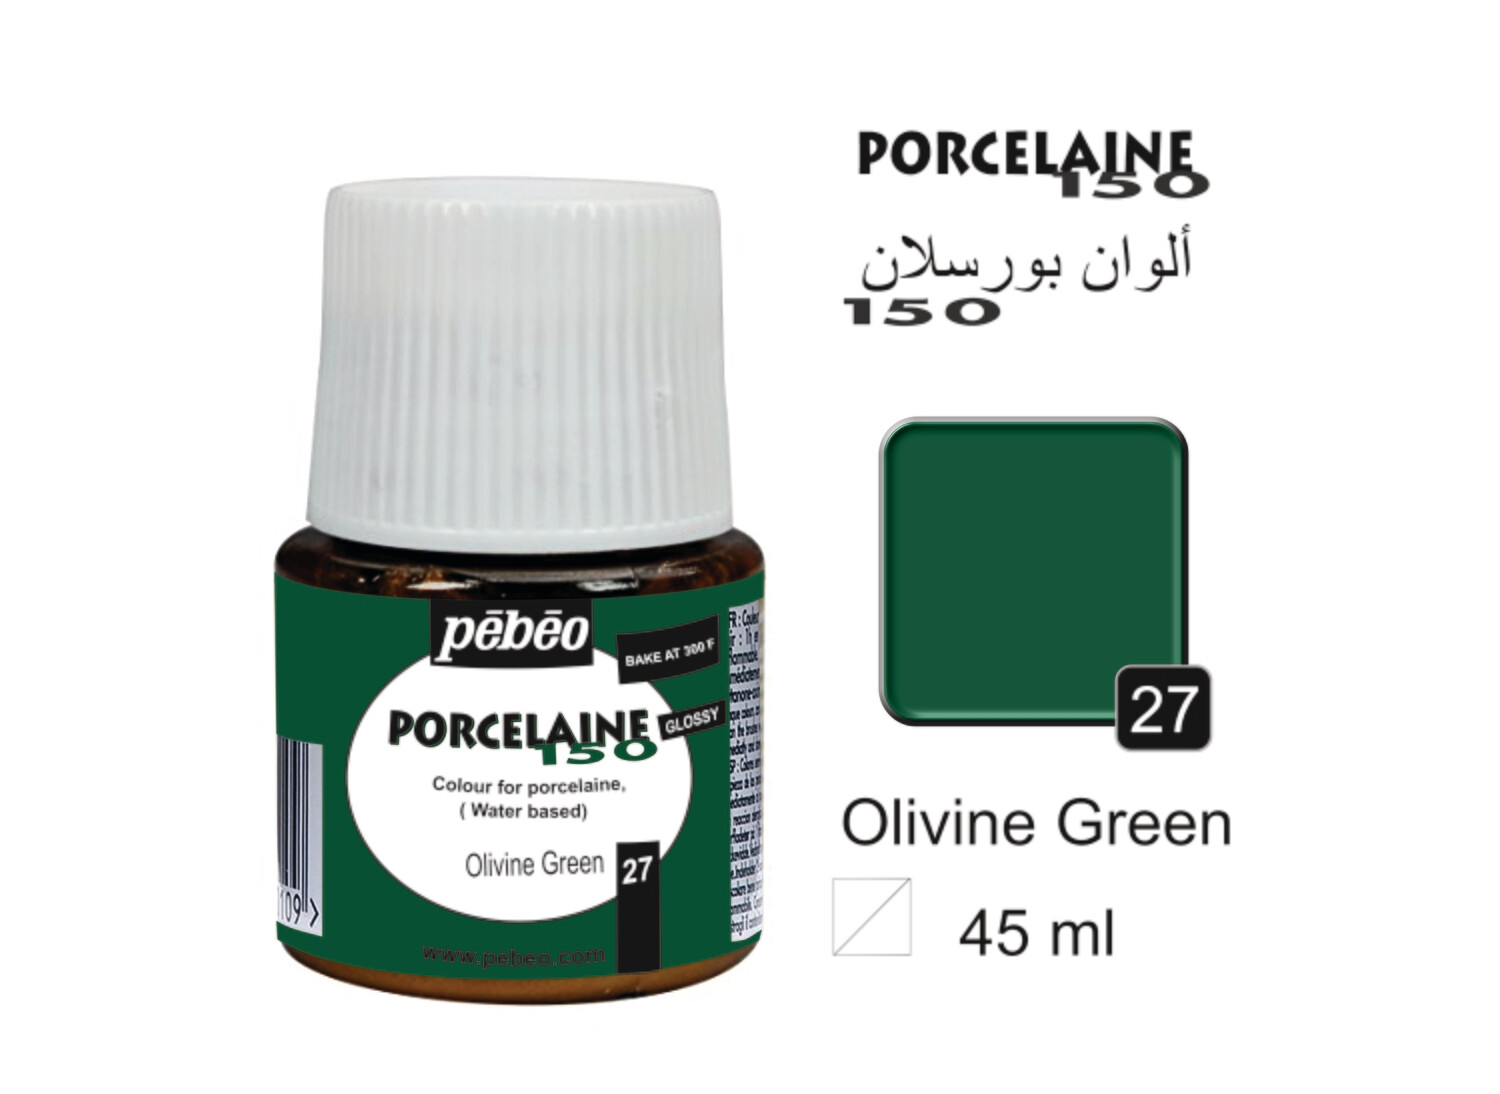 PORCELAINE 150, GLOSS 45 ml, Olivine green No. 27